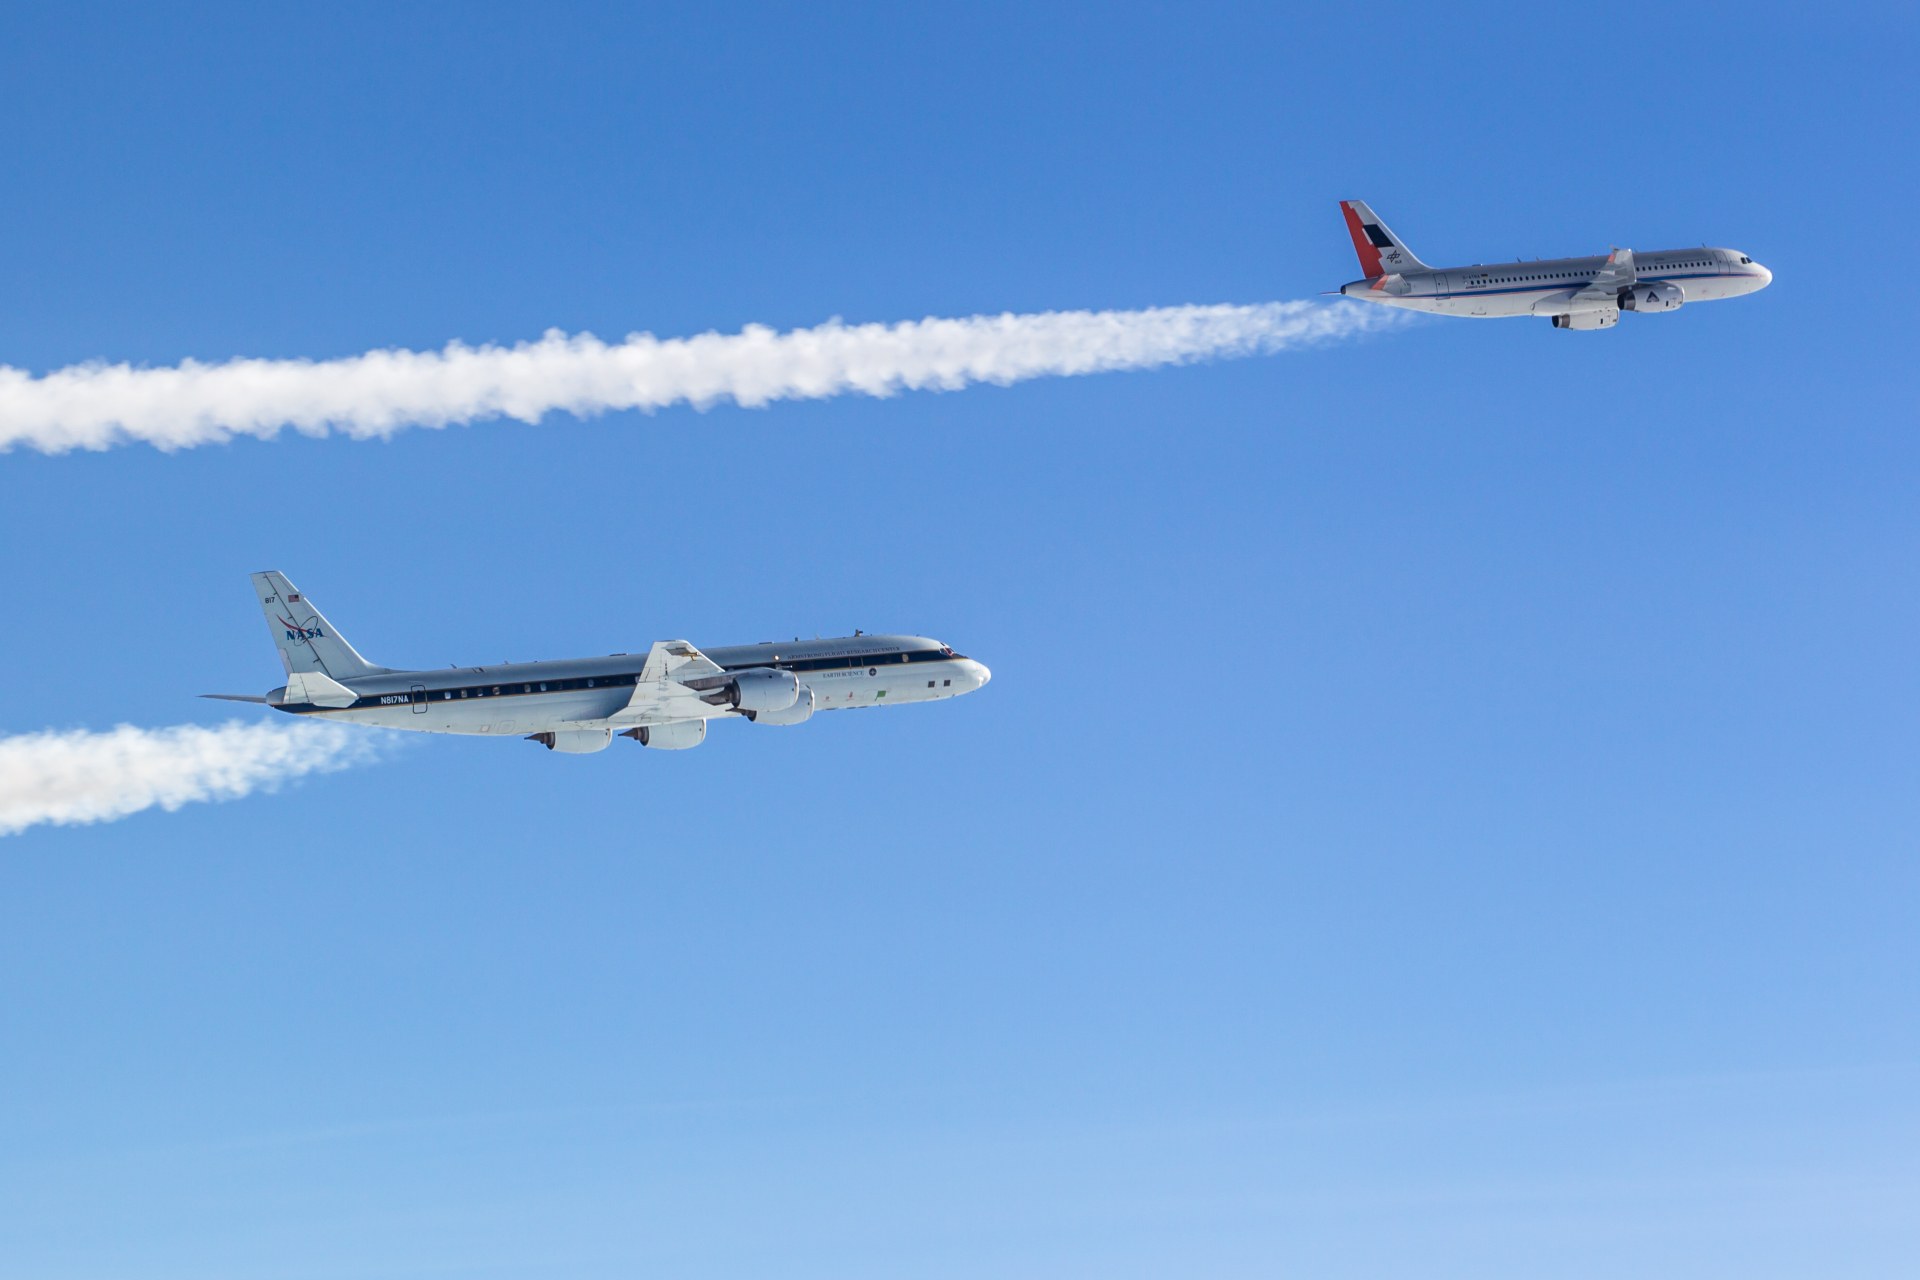 NASA’s DC-8 and DLR’s A320 ATRA aircraft in flight